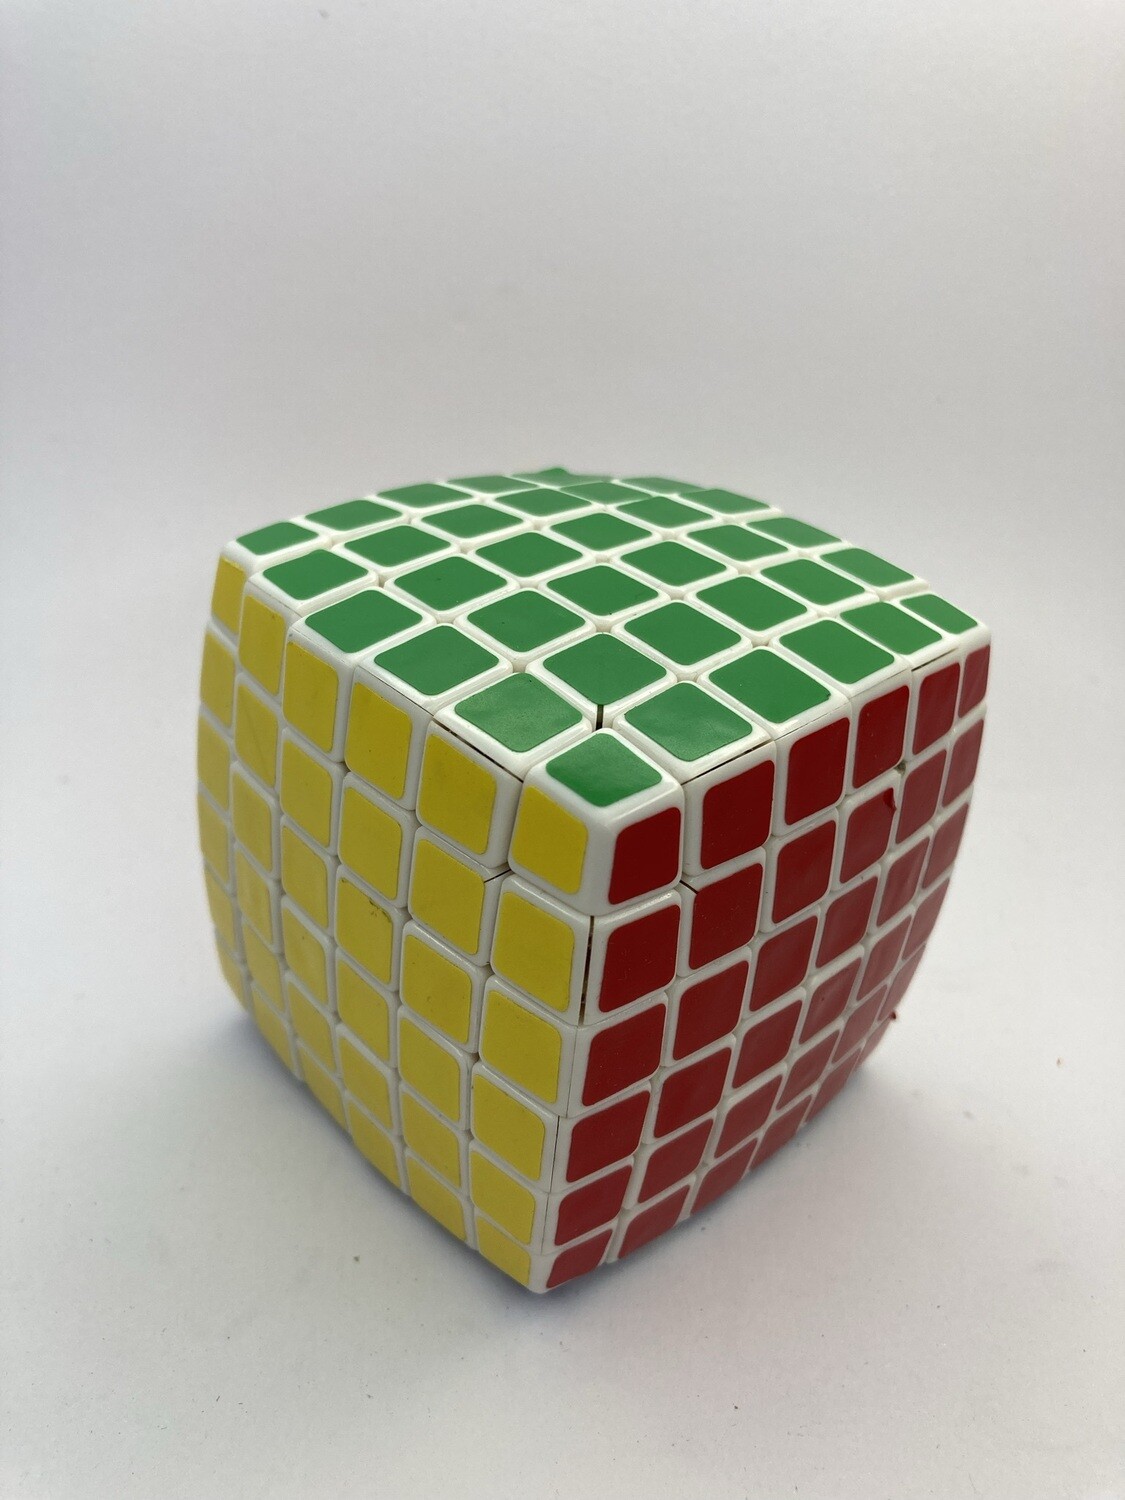 Cubo De Rubik Gigante Cubo rubik grande